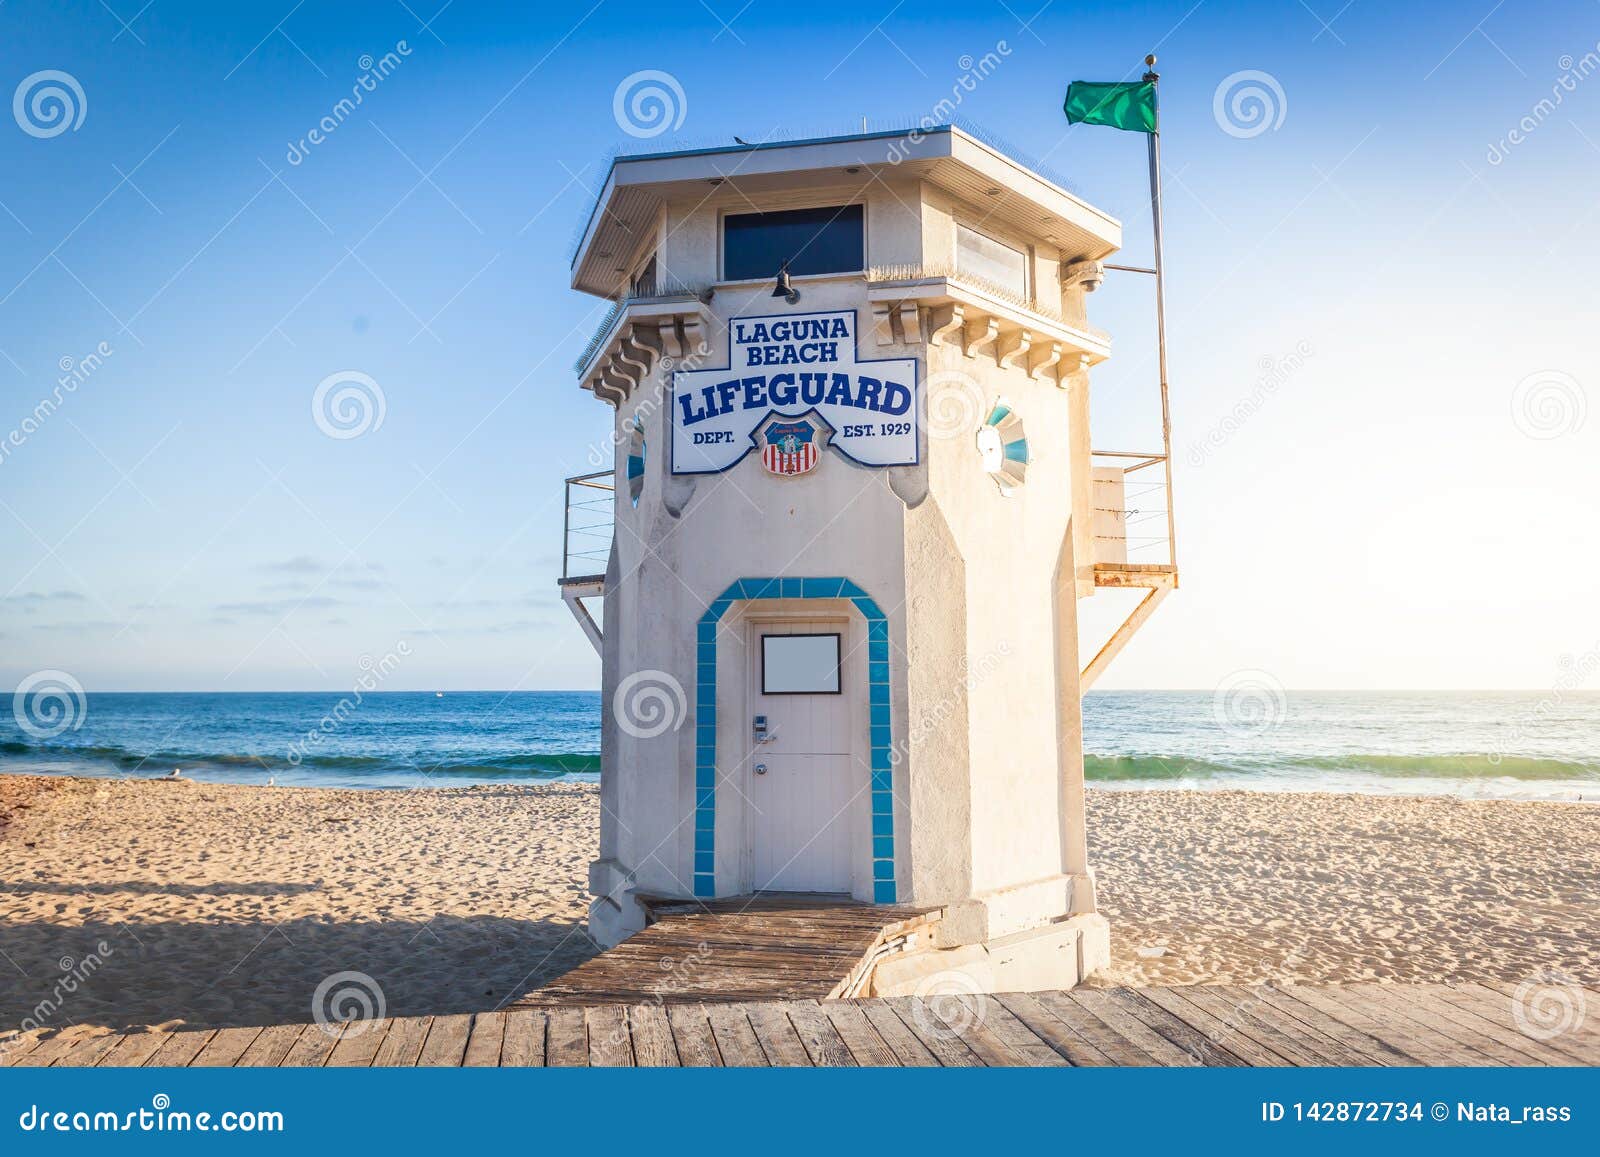 laguna beach lifeguard tower